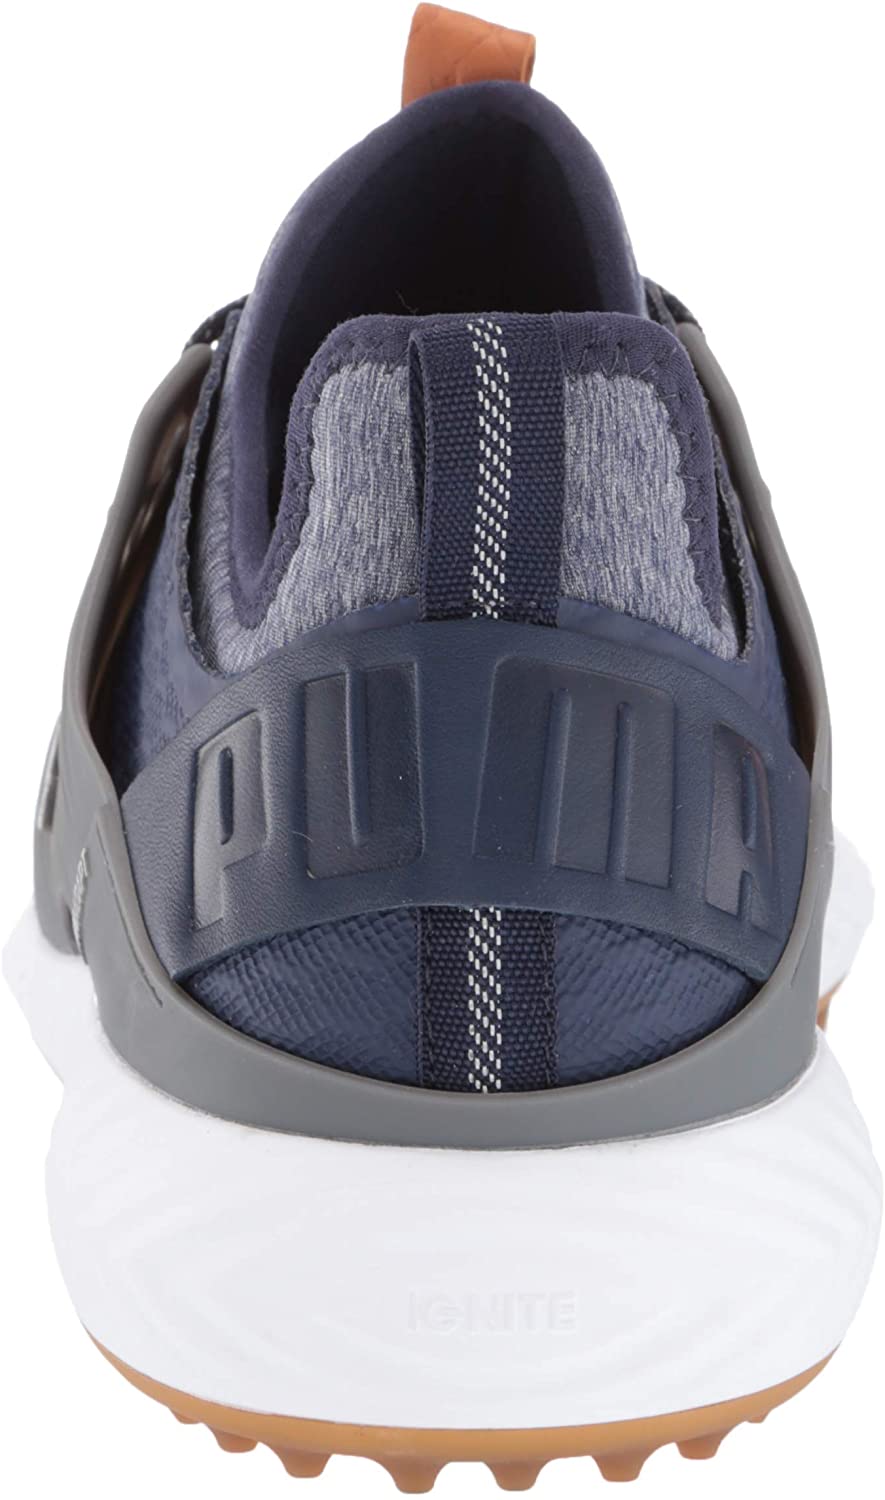 Puma IGNITE PWRADAPT Caged Golf Shoes Peacoat/PUMA Silver/Quiet Shade 8.5 Medium - image 3 of 7